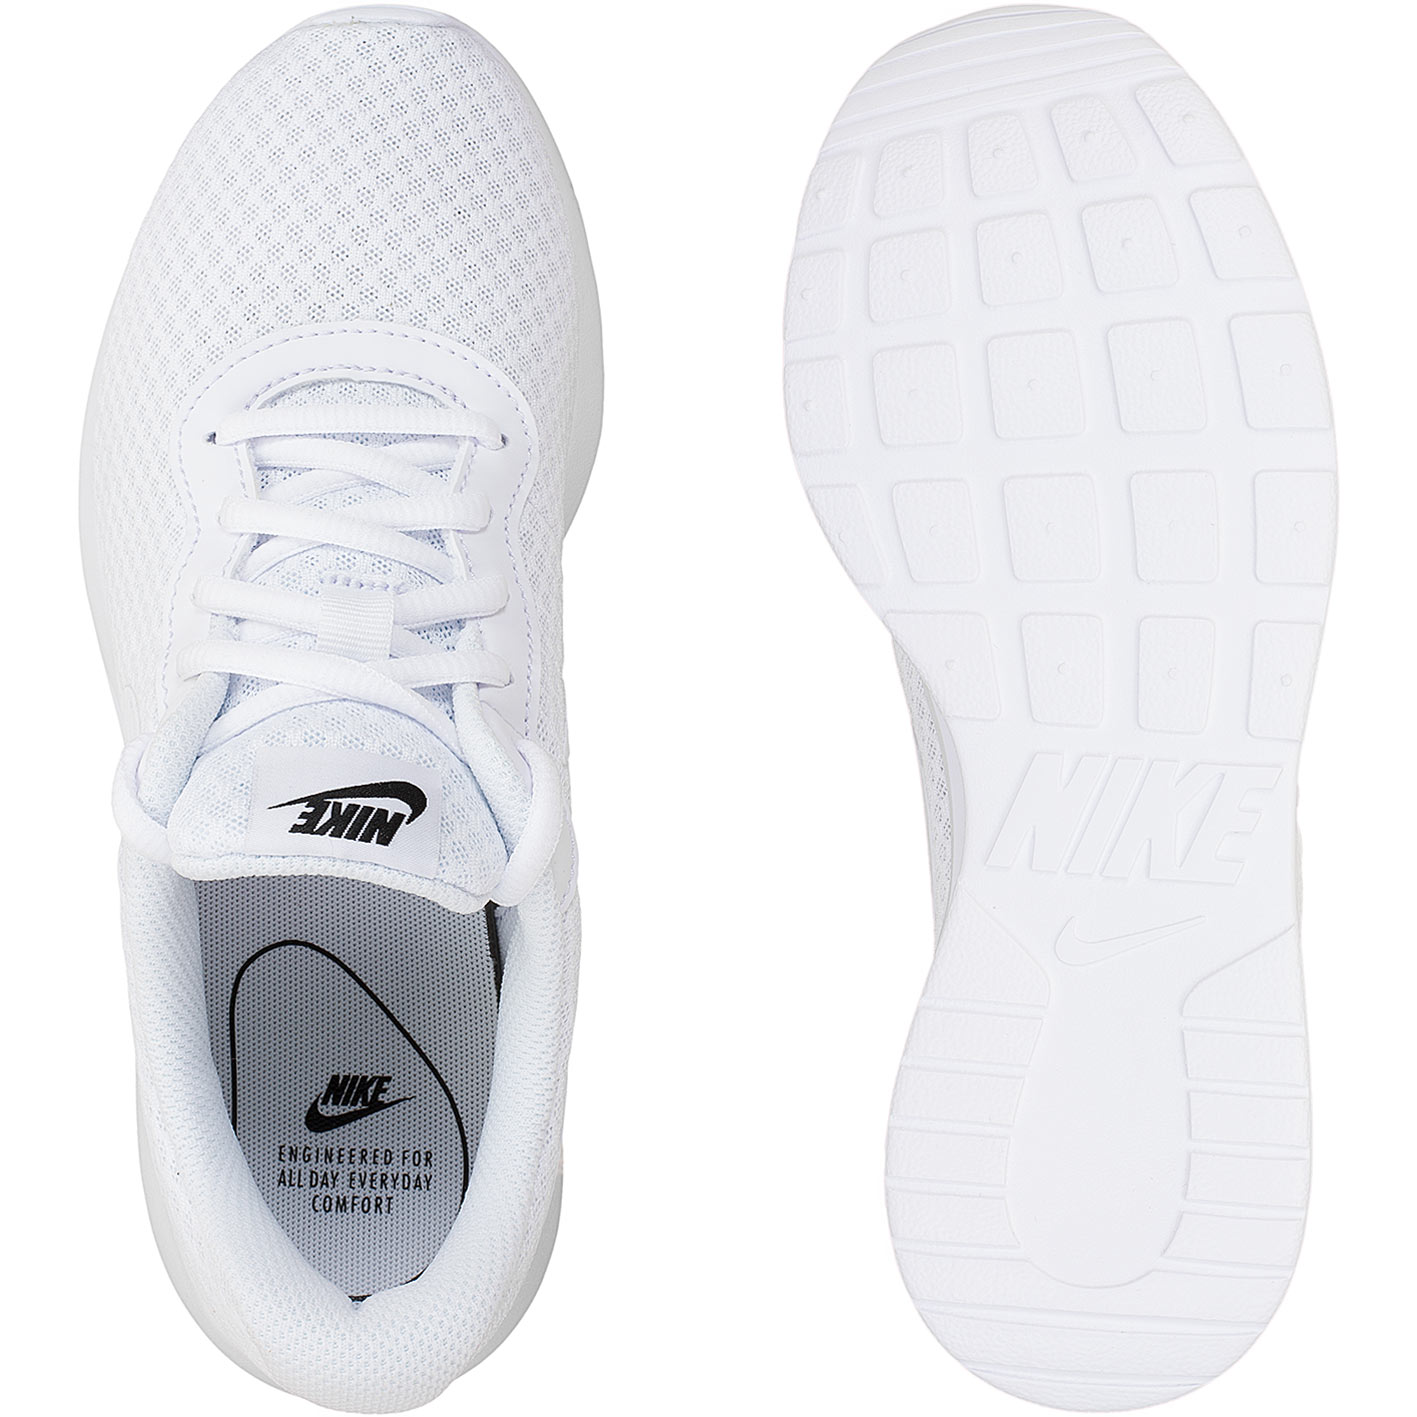 ☆ Nike Damen Sneaker Tanjun weiß/weiß - hier bestellen!